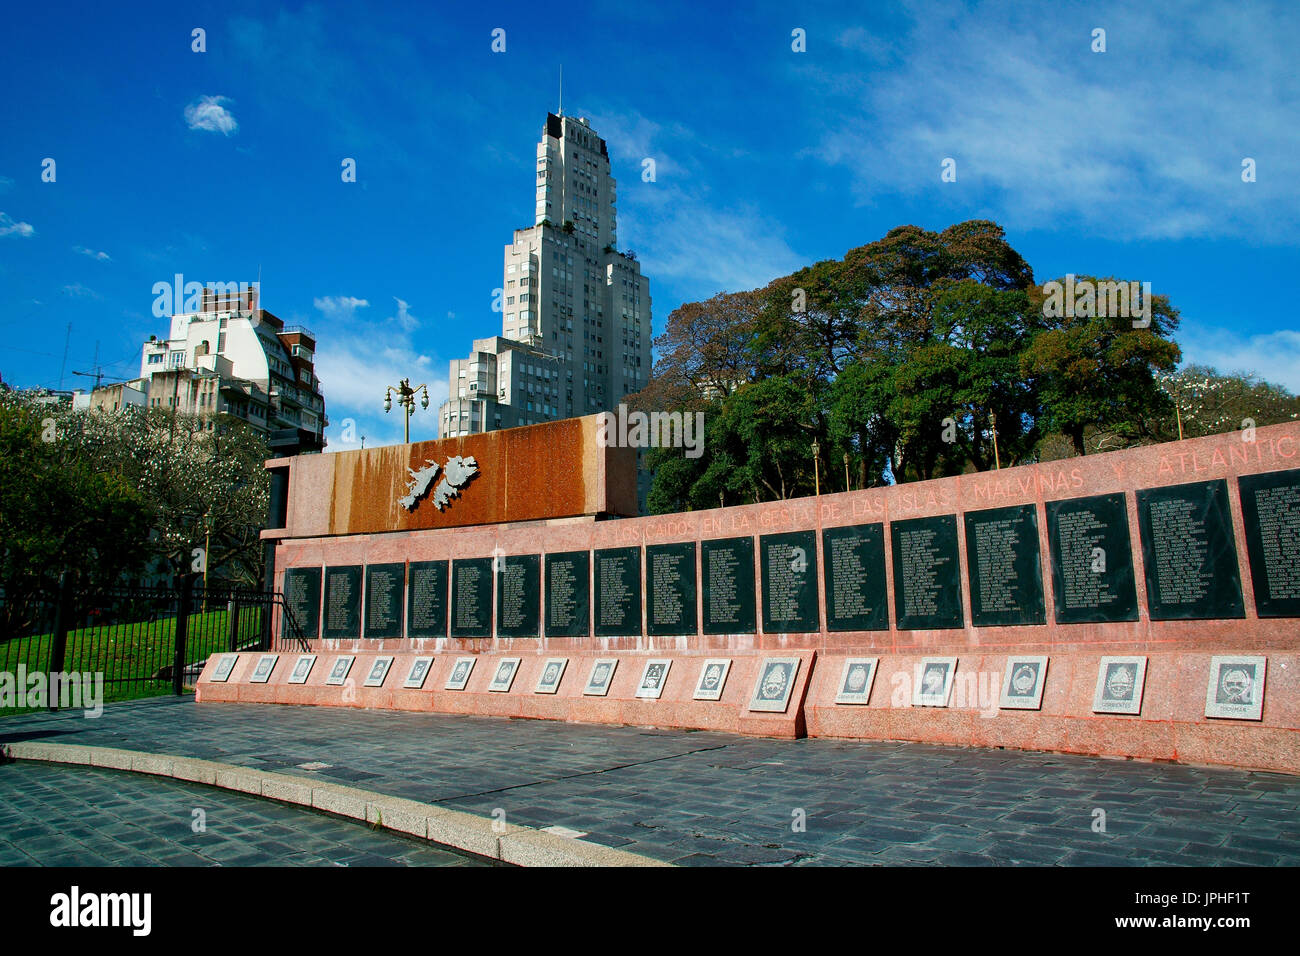 Monumento a los caídos en Malvinas, memorial to the fallen soldiers in the Falkland War, Buenos Aires, Argentina Stock Photo